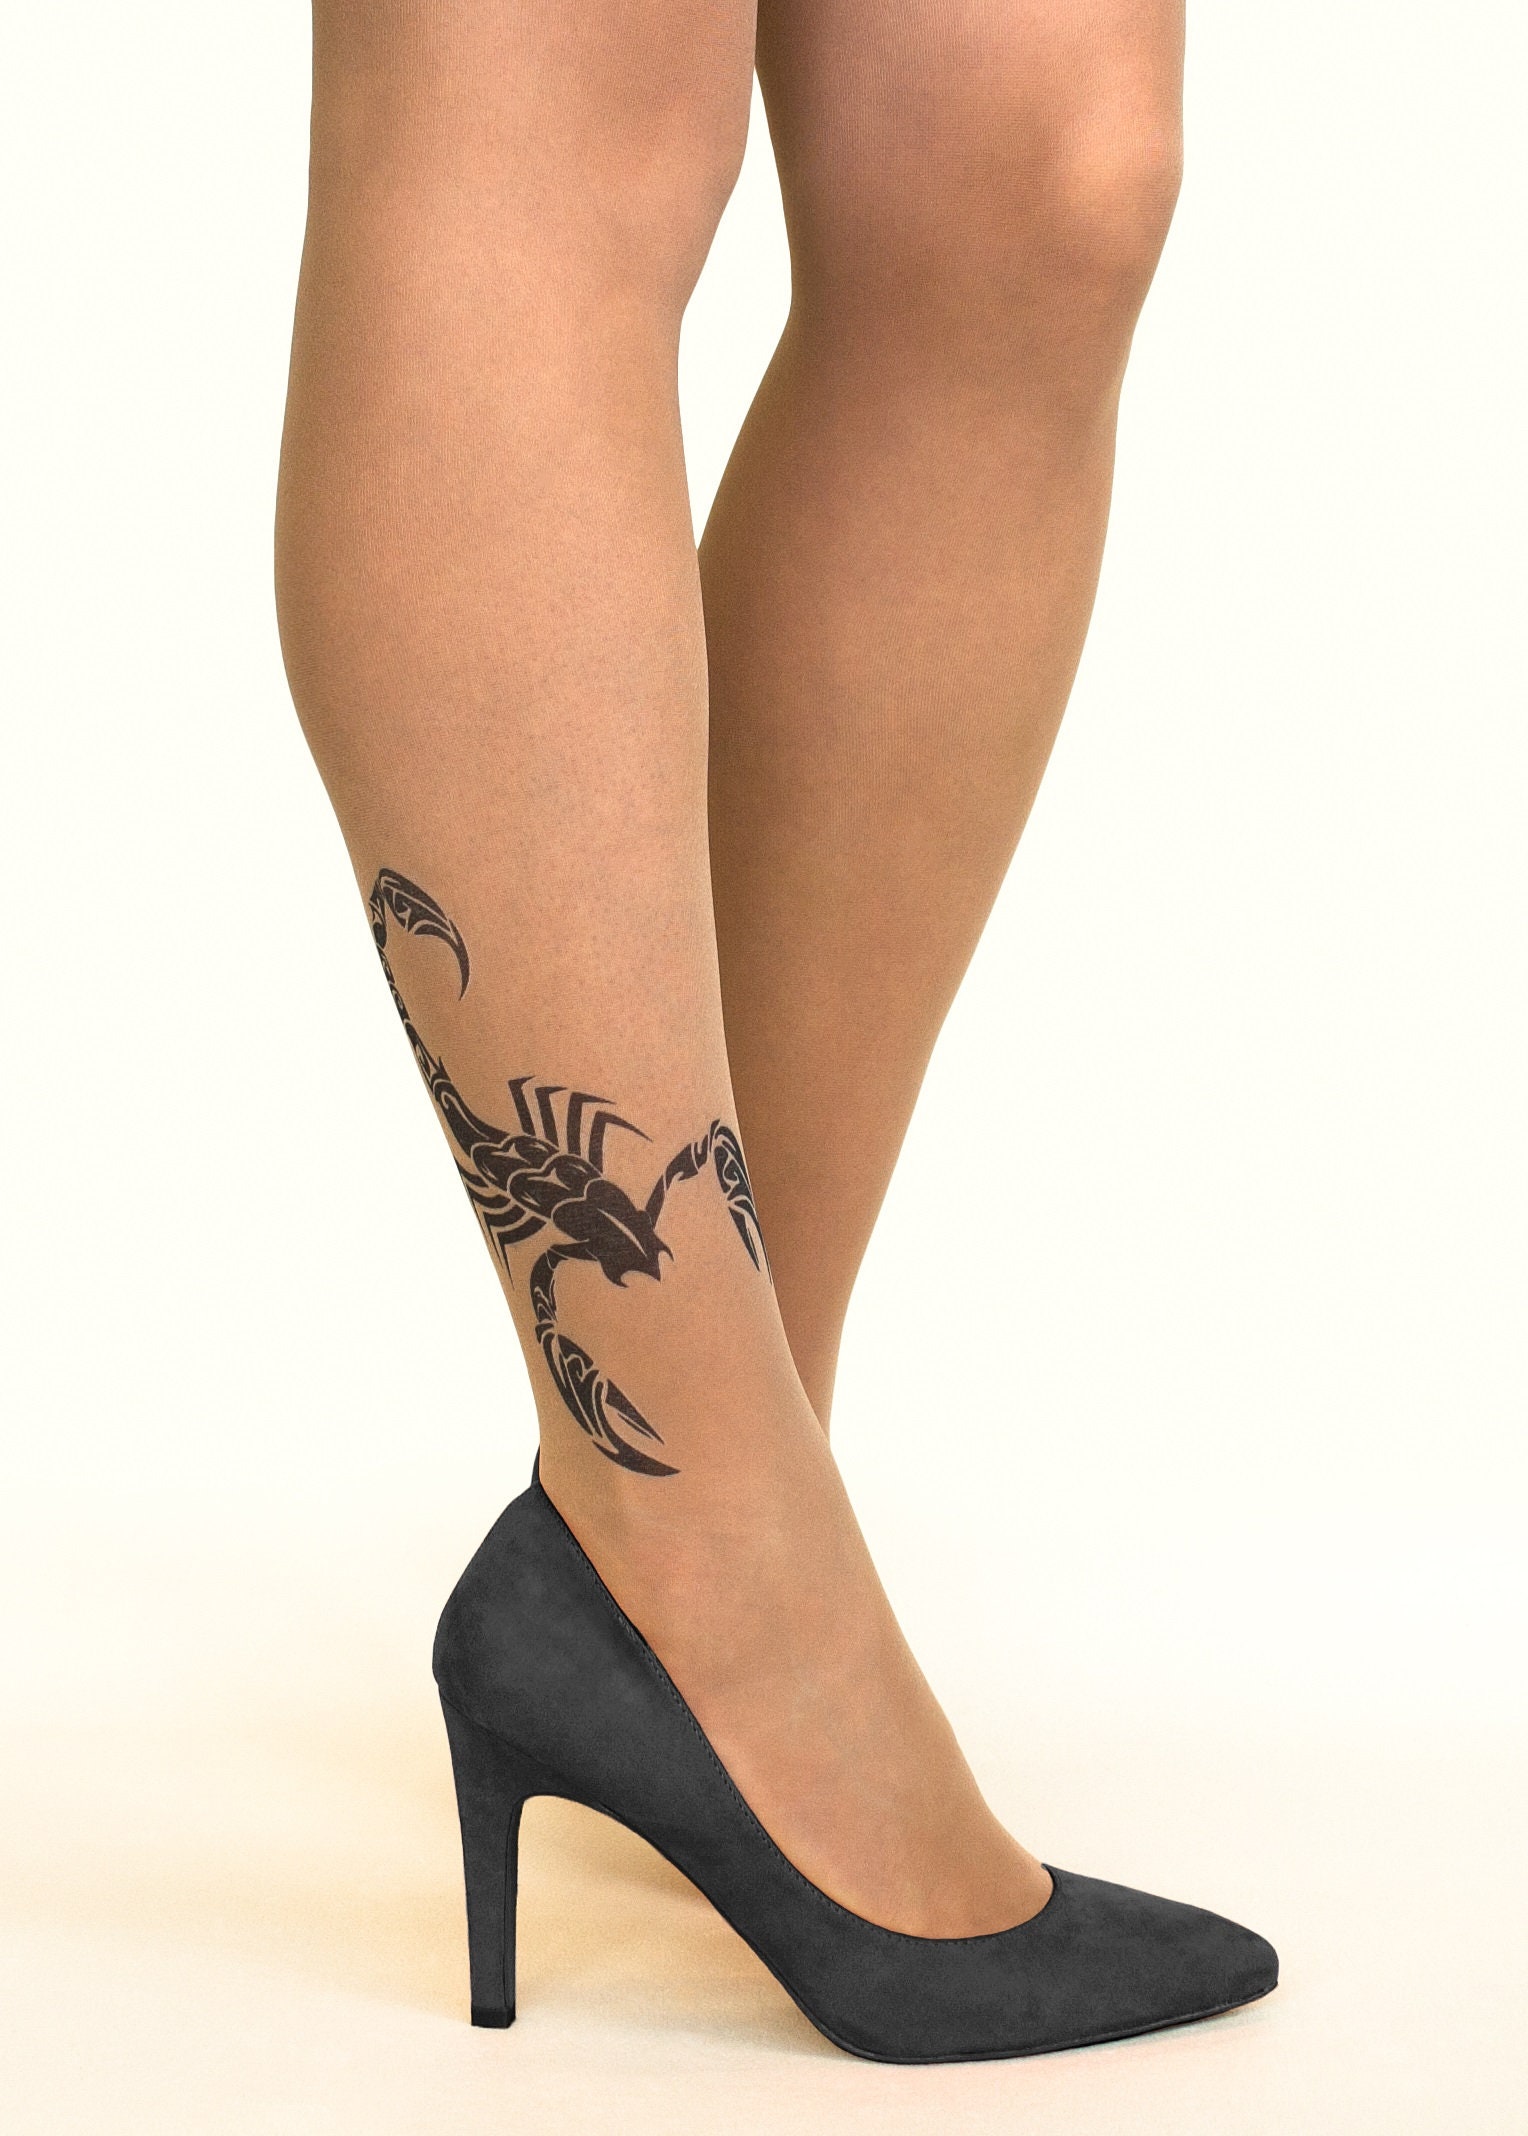 35 Traditional Scorpio Tattoos On Foot